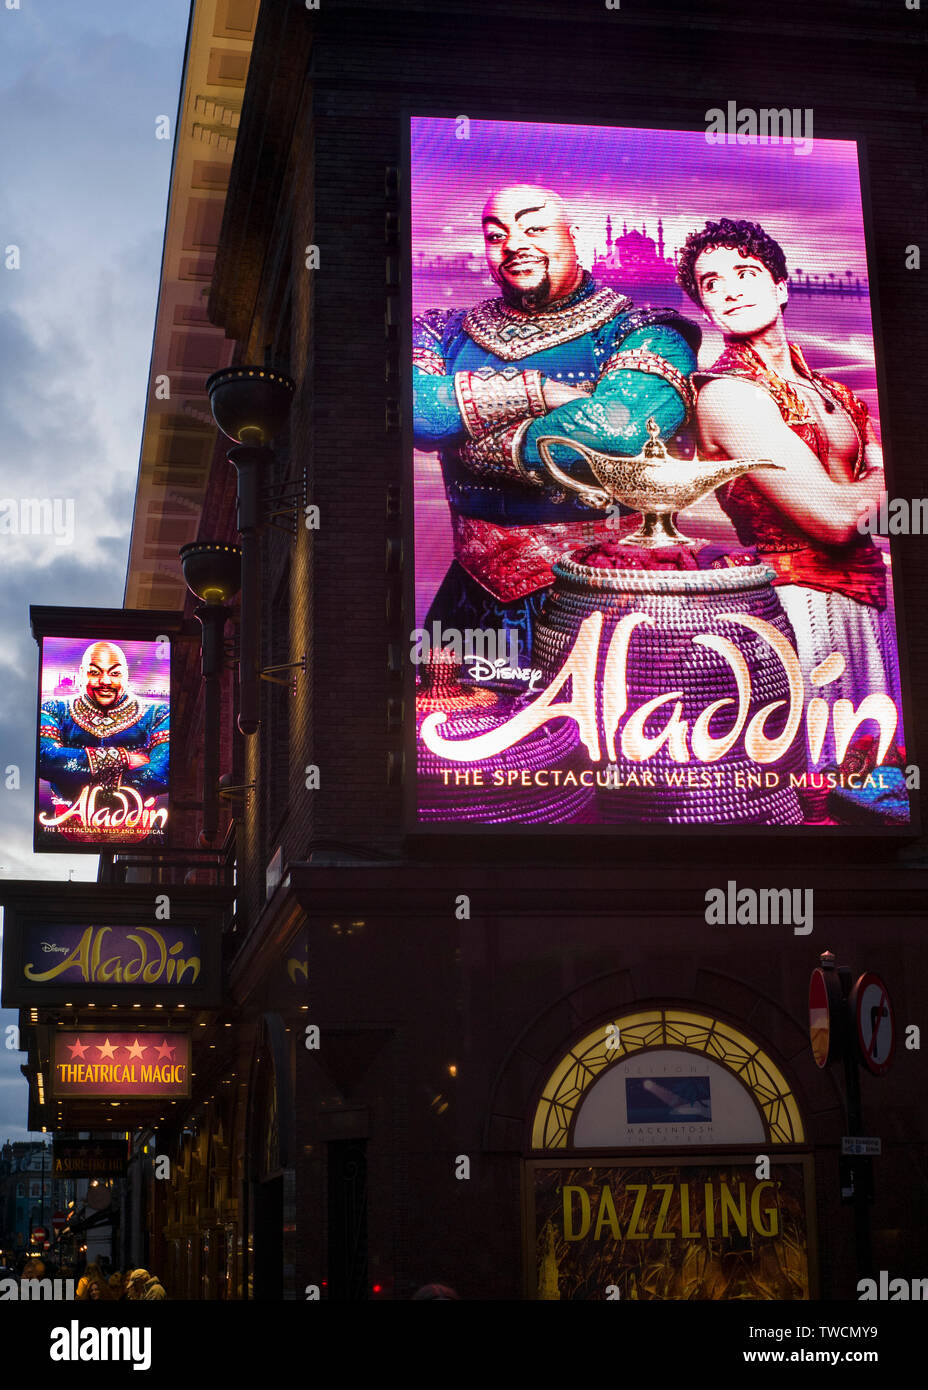 Aladin west end musical la signalisation sur Prince Edward Theatre dans Old Compton Street, Soho, London UK Banque D'Images